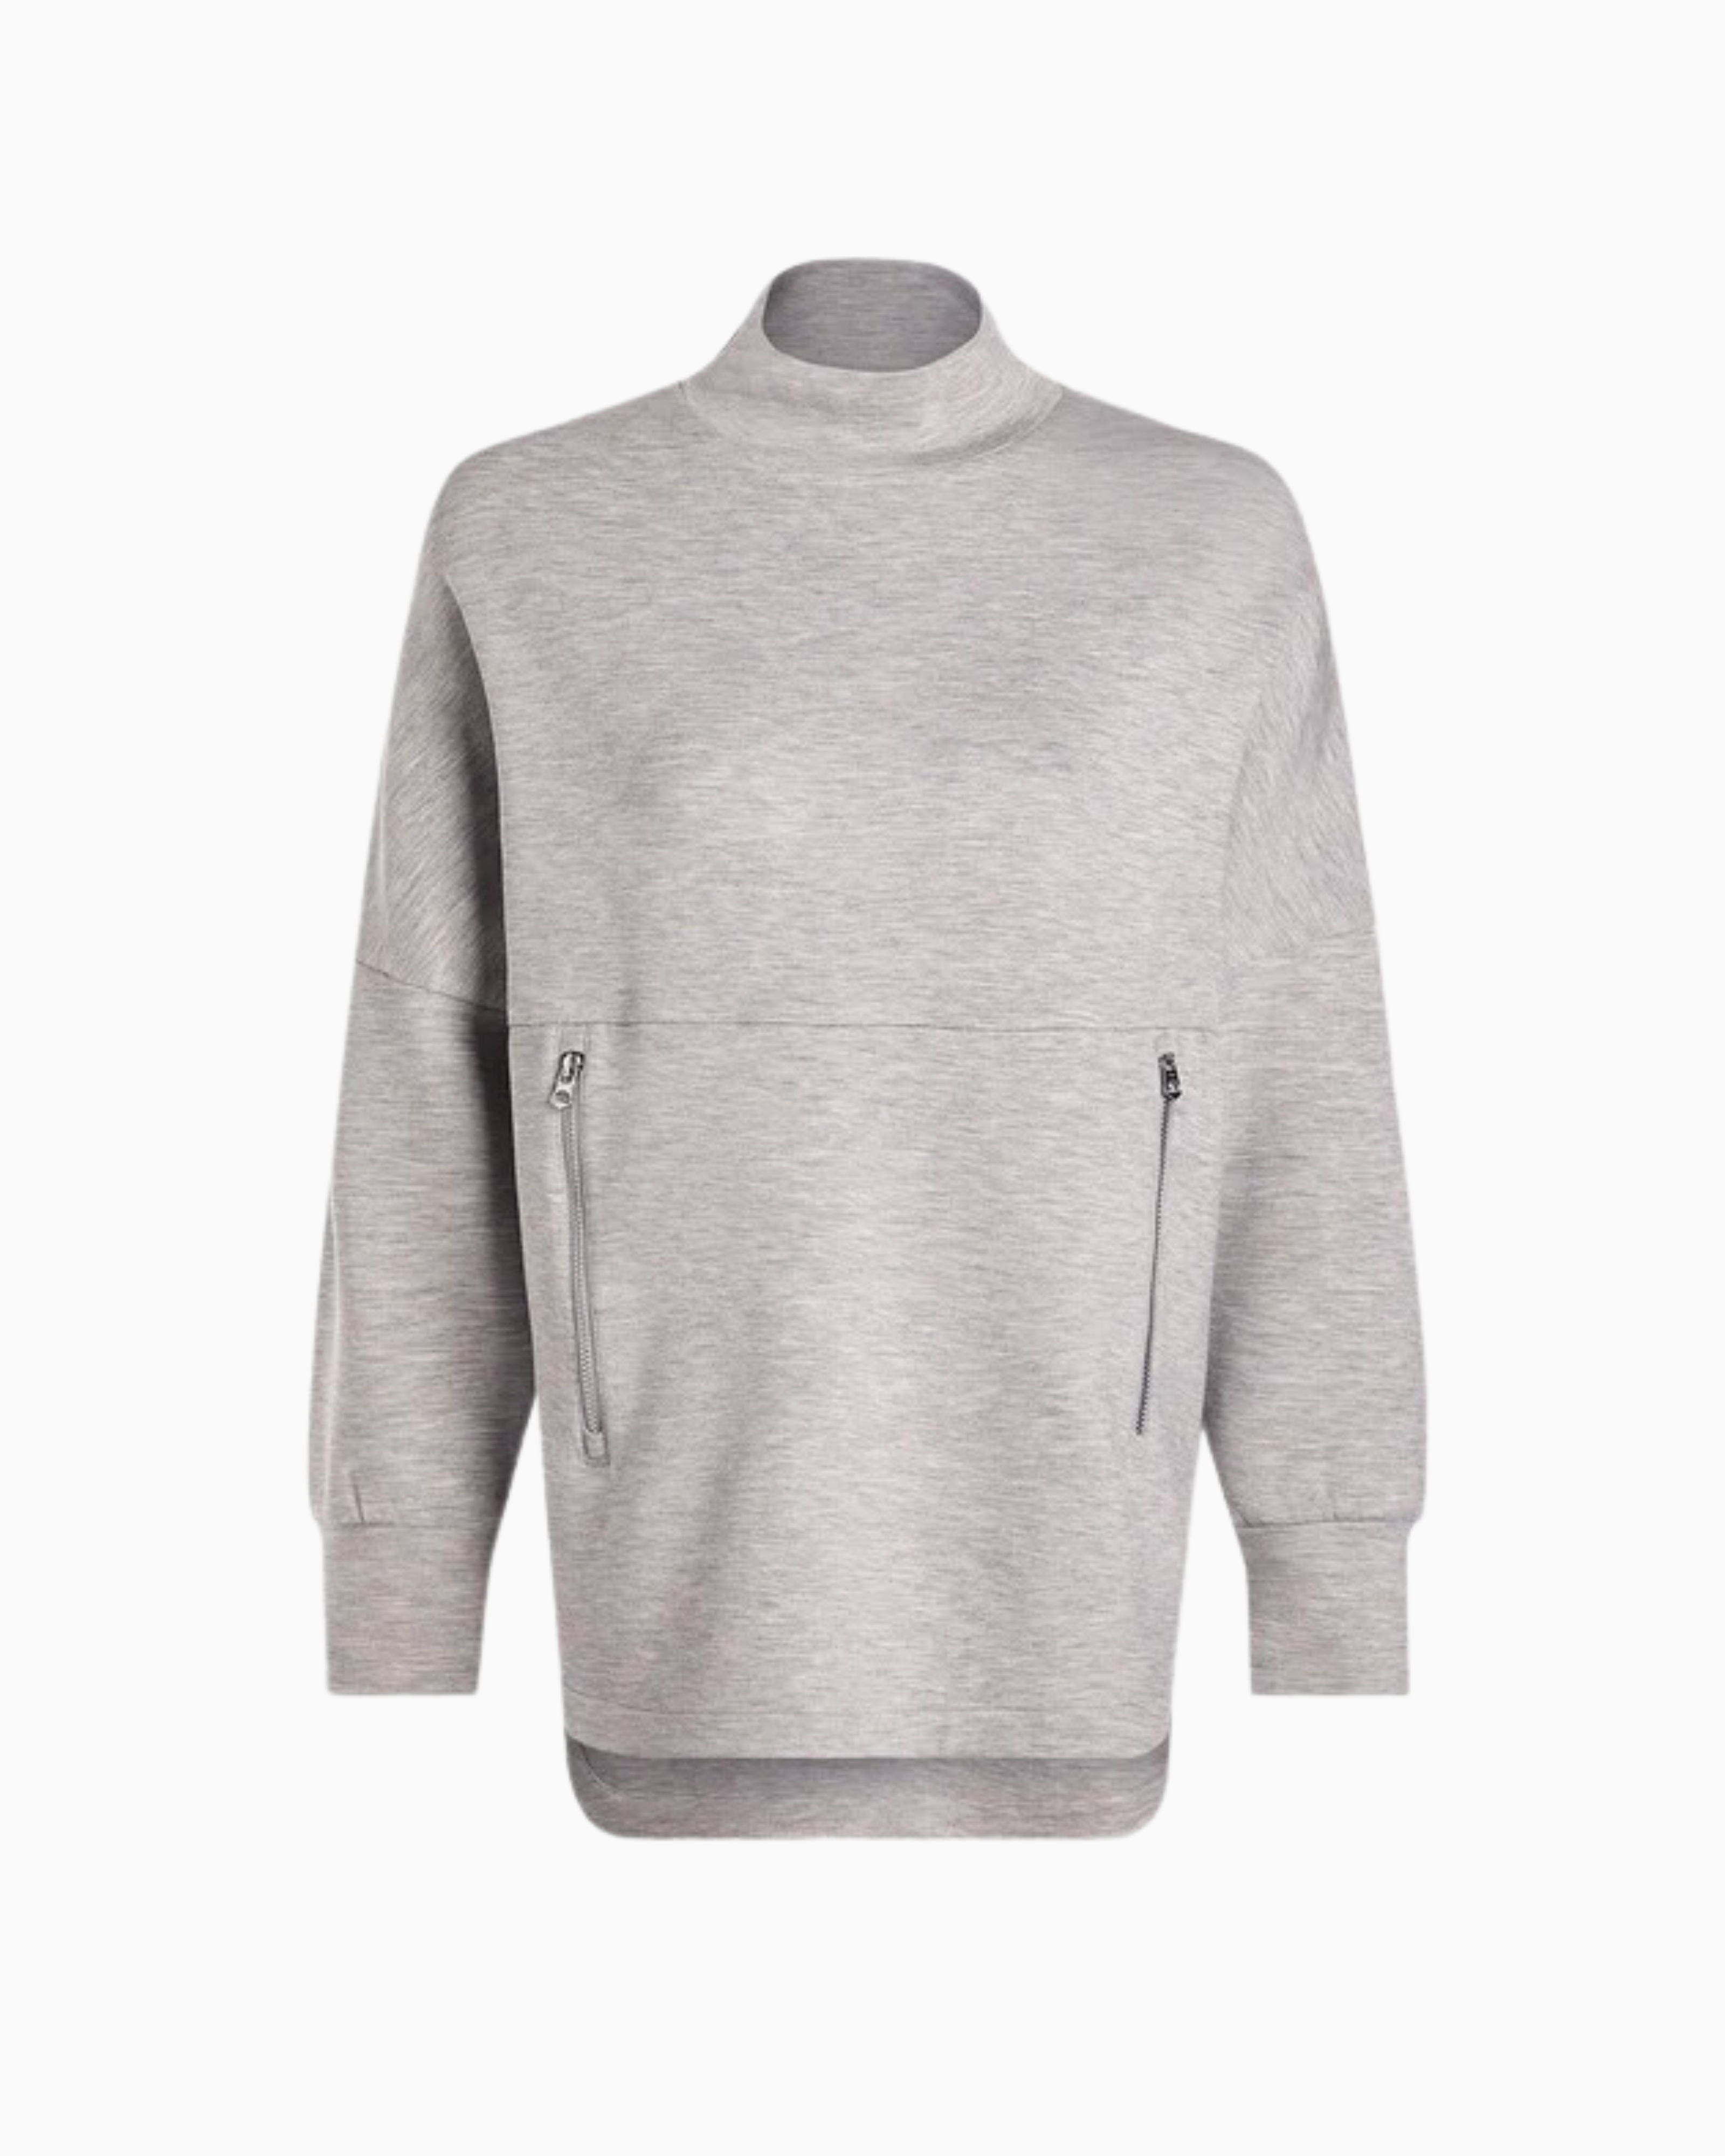 Varley Bay Sweatshirt in Grey Marl